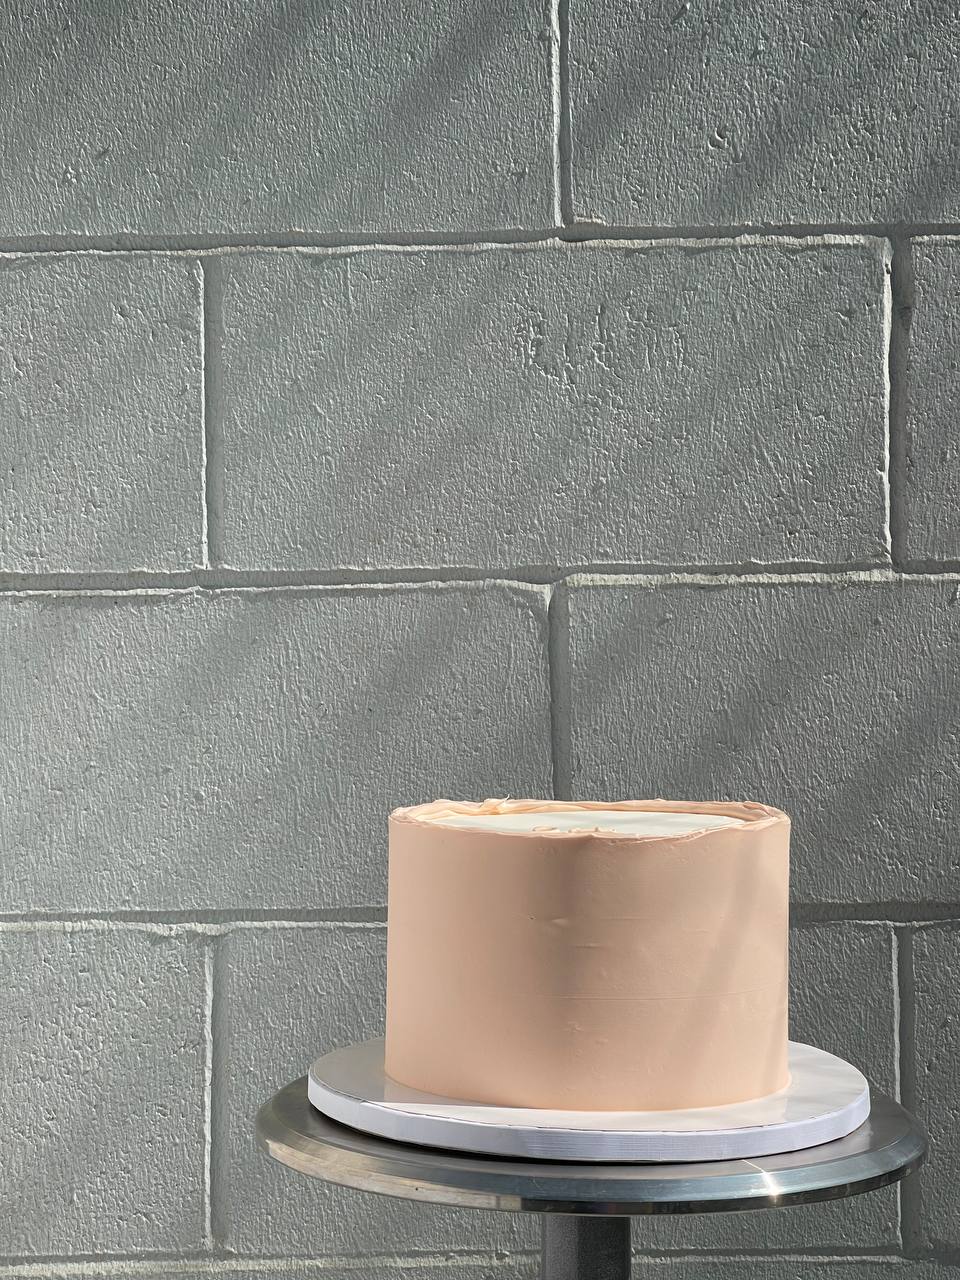 Chic minimalist Cake